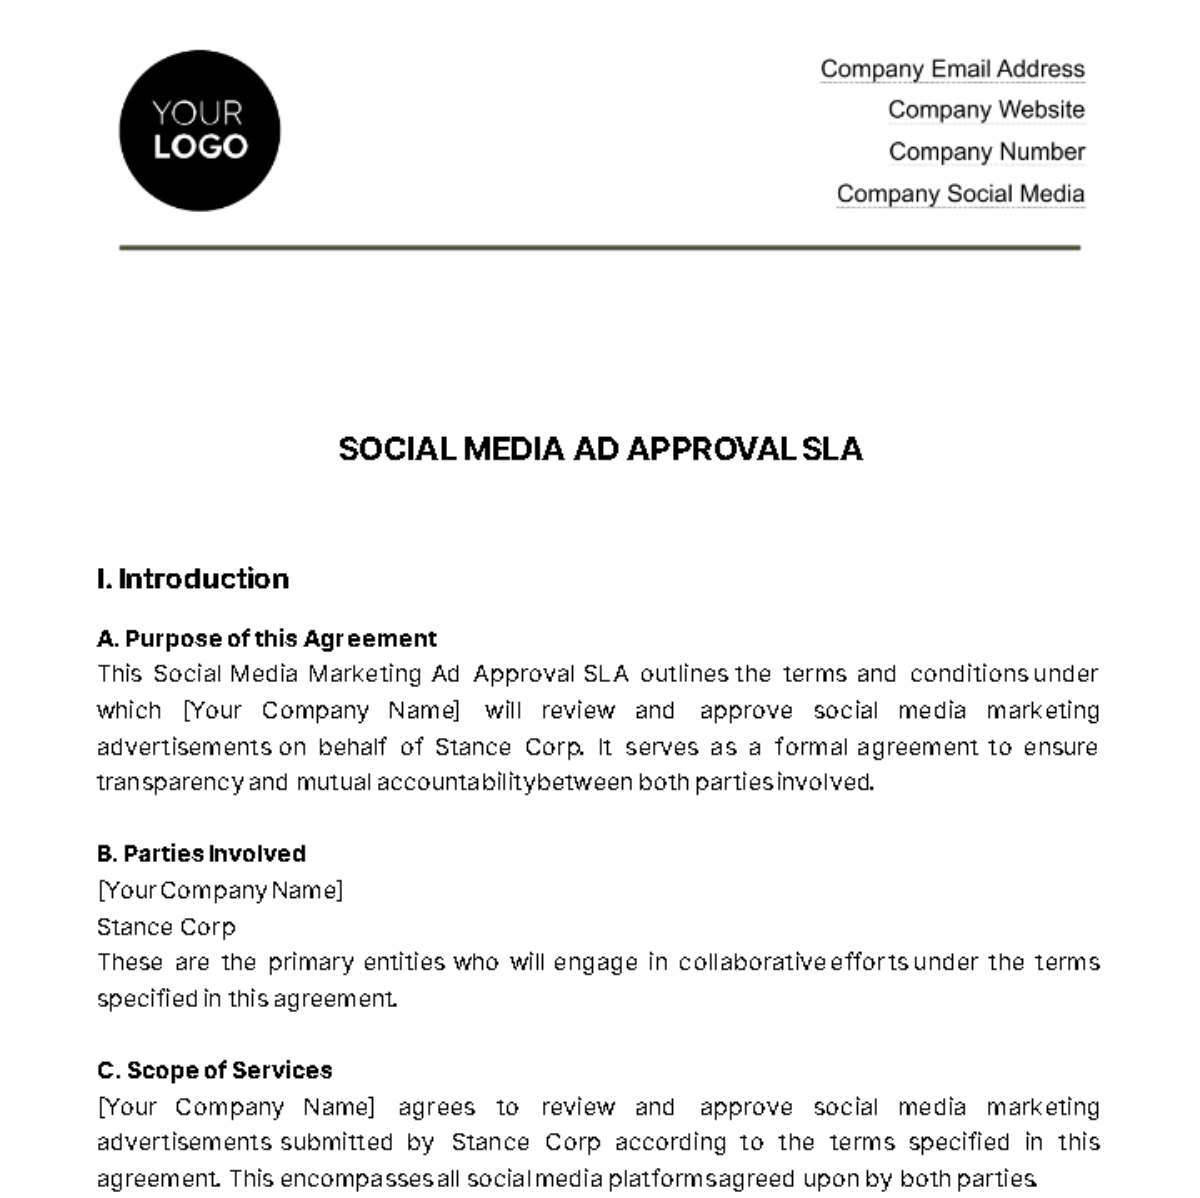 Social Media Marketing Ad Approval SLA Template